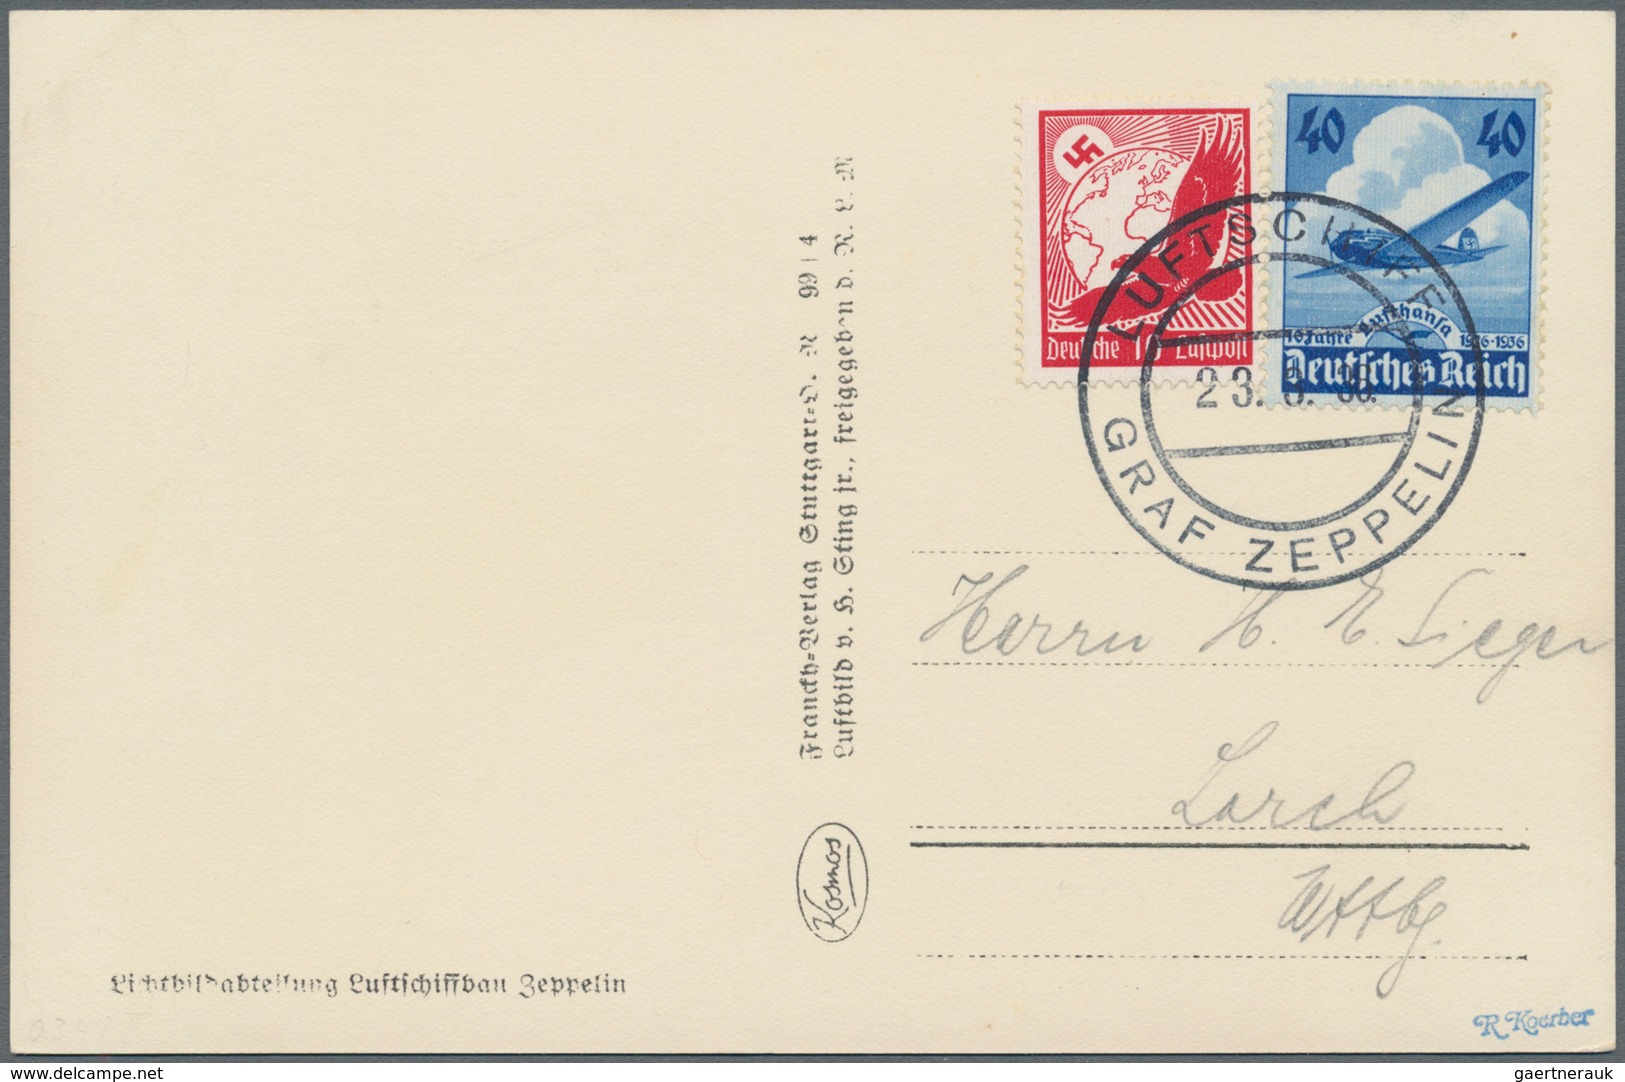 Zeppelinpost Deutschland: 1912/1945 (ca): Posten mit über 90 teils sehr raren Zeppelin-Belegen, indi